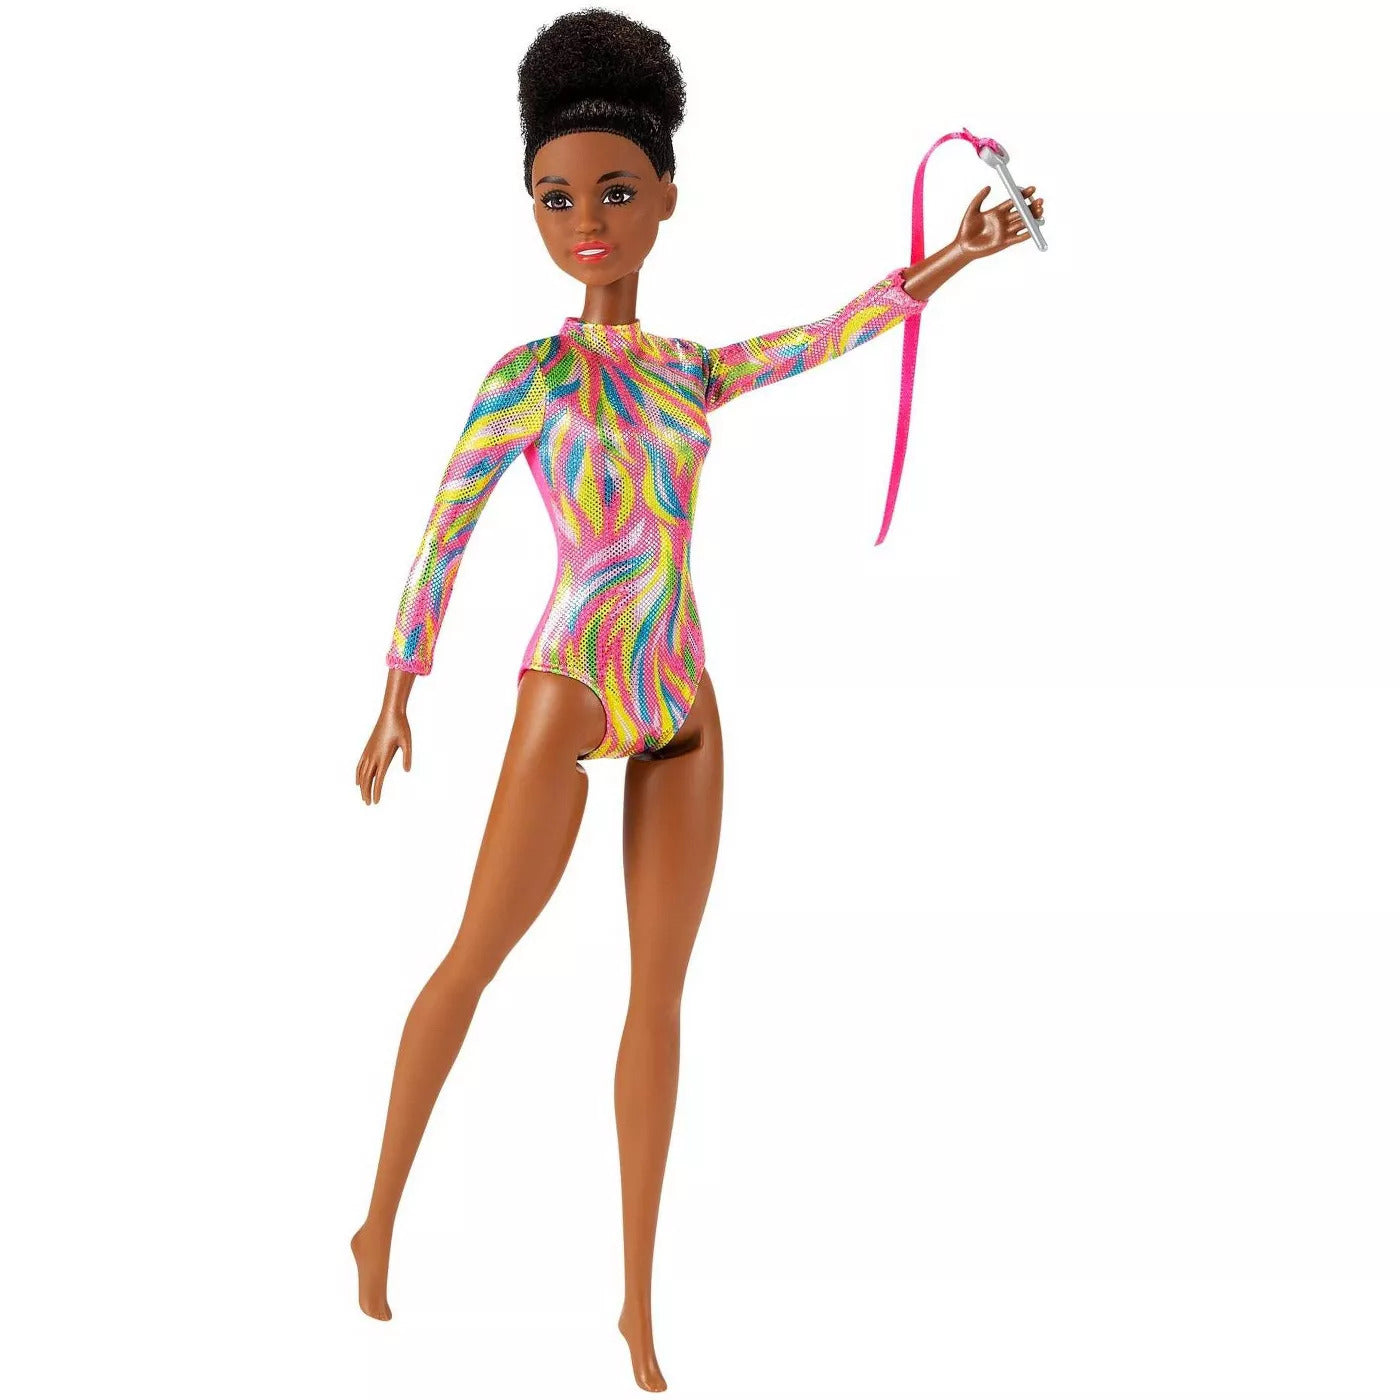 Barbie Careers Doll - Rhythmic Gymnast